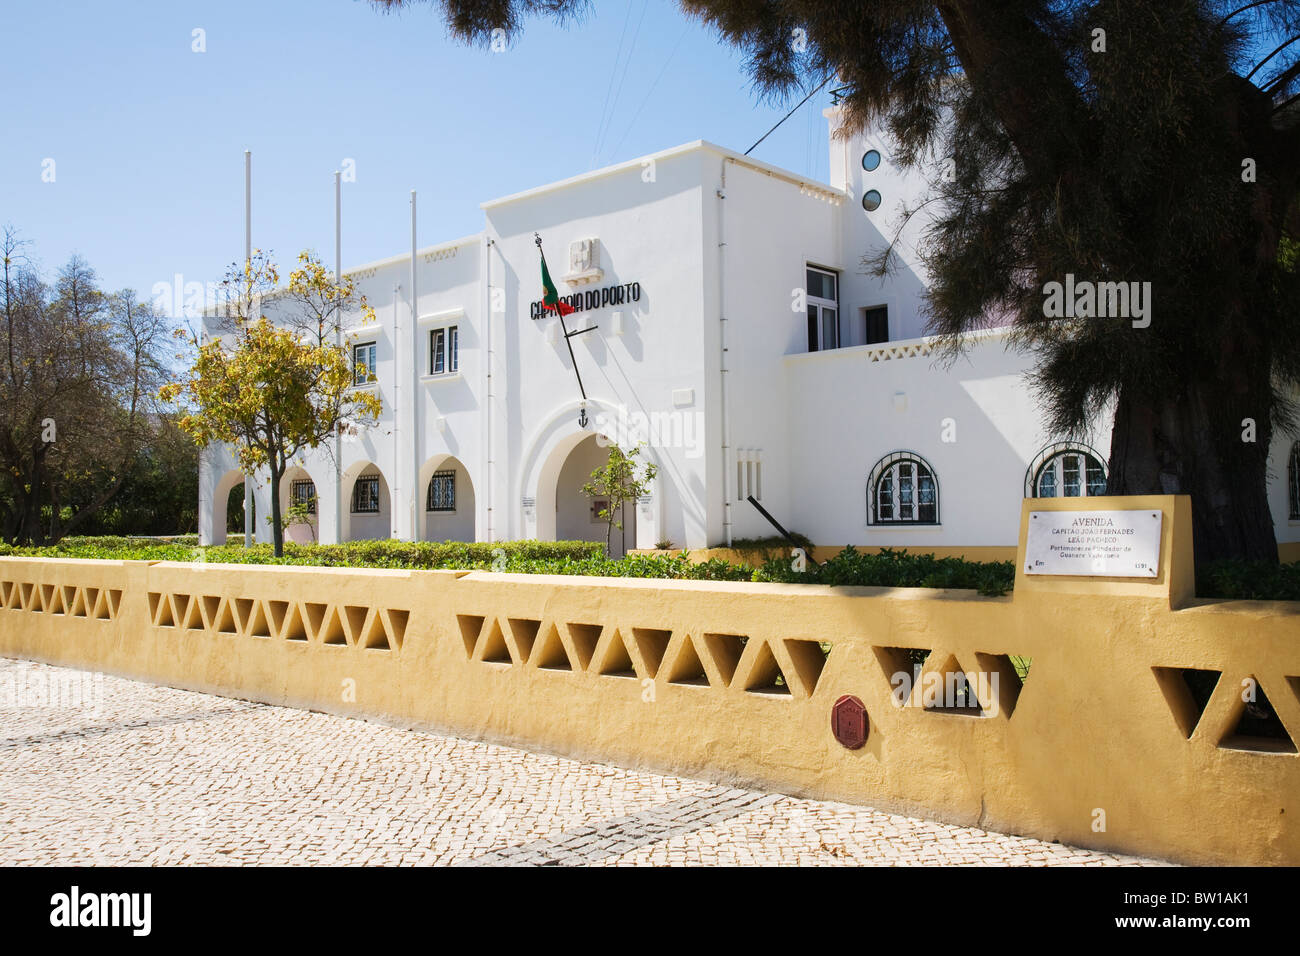 The Maritime Police offices in Portimao, Algarve, Portugal. Stock Photo